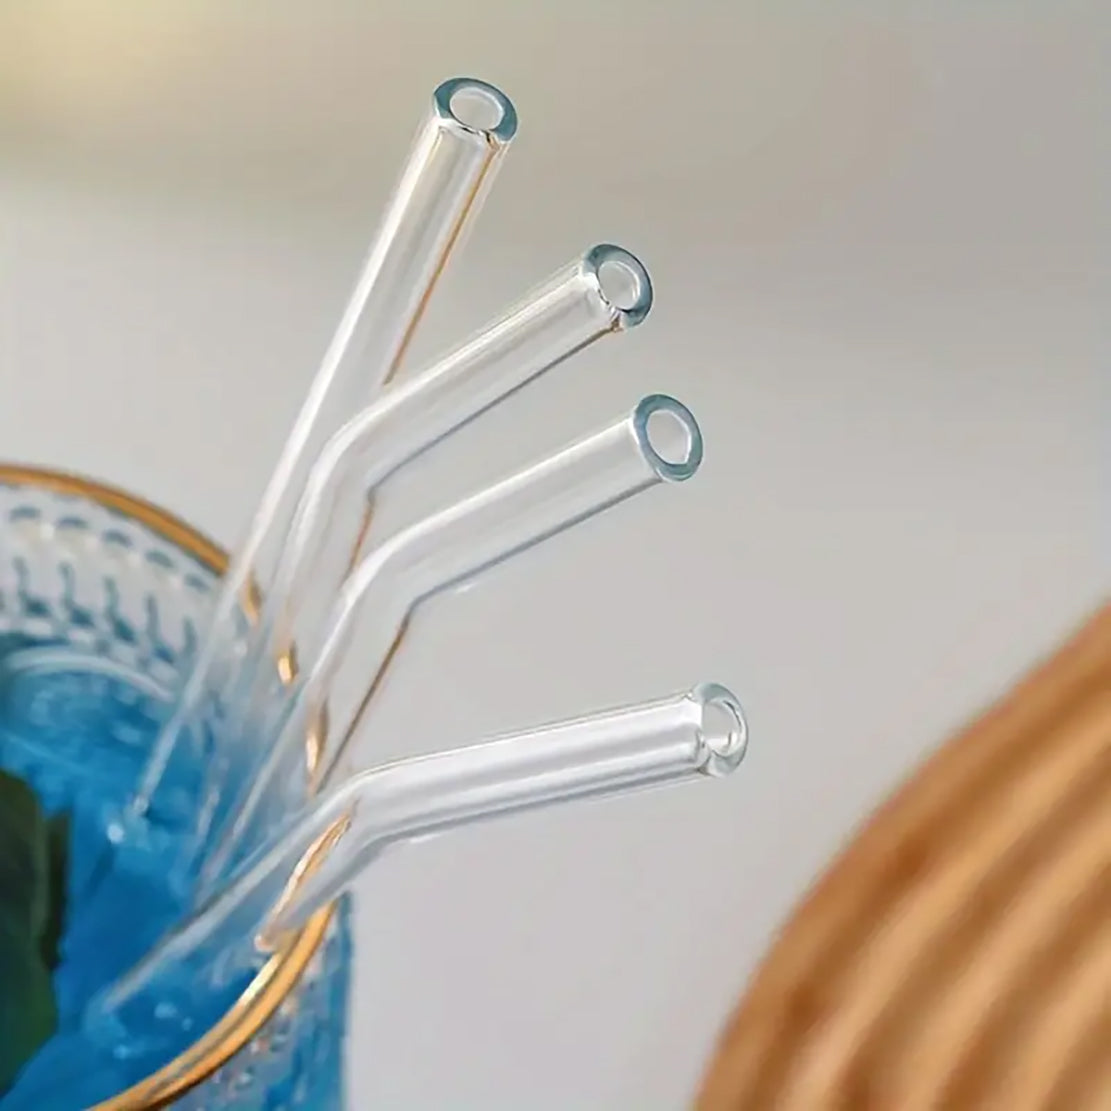 5 pcs/Set (4 Straws +1 Brush) High Borosilicate Transparent Glass Straws